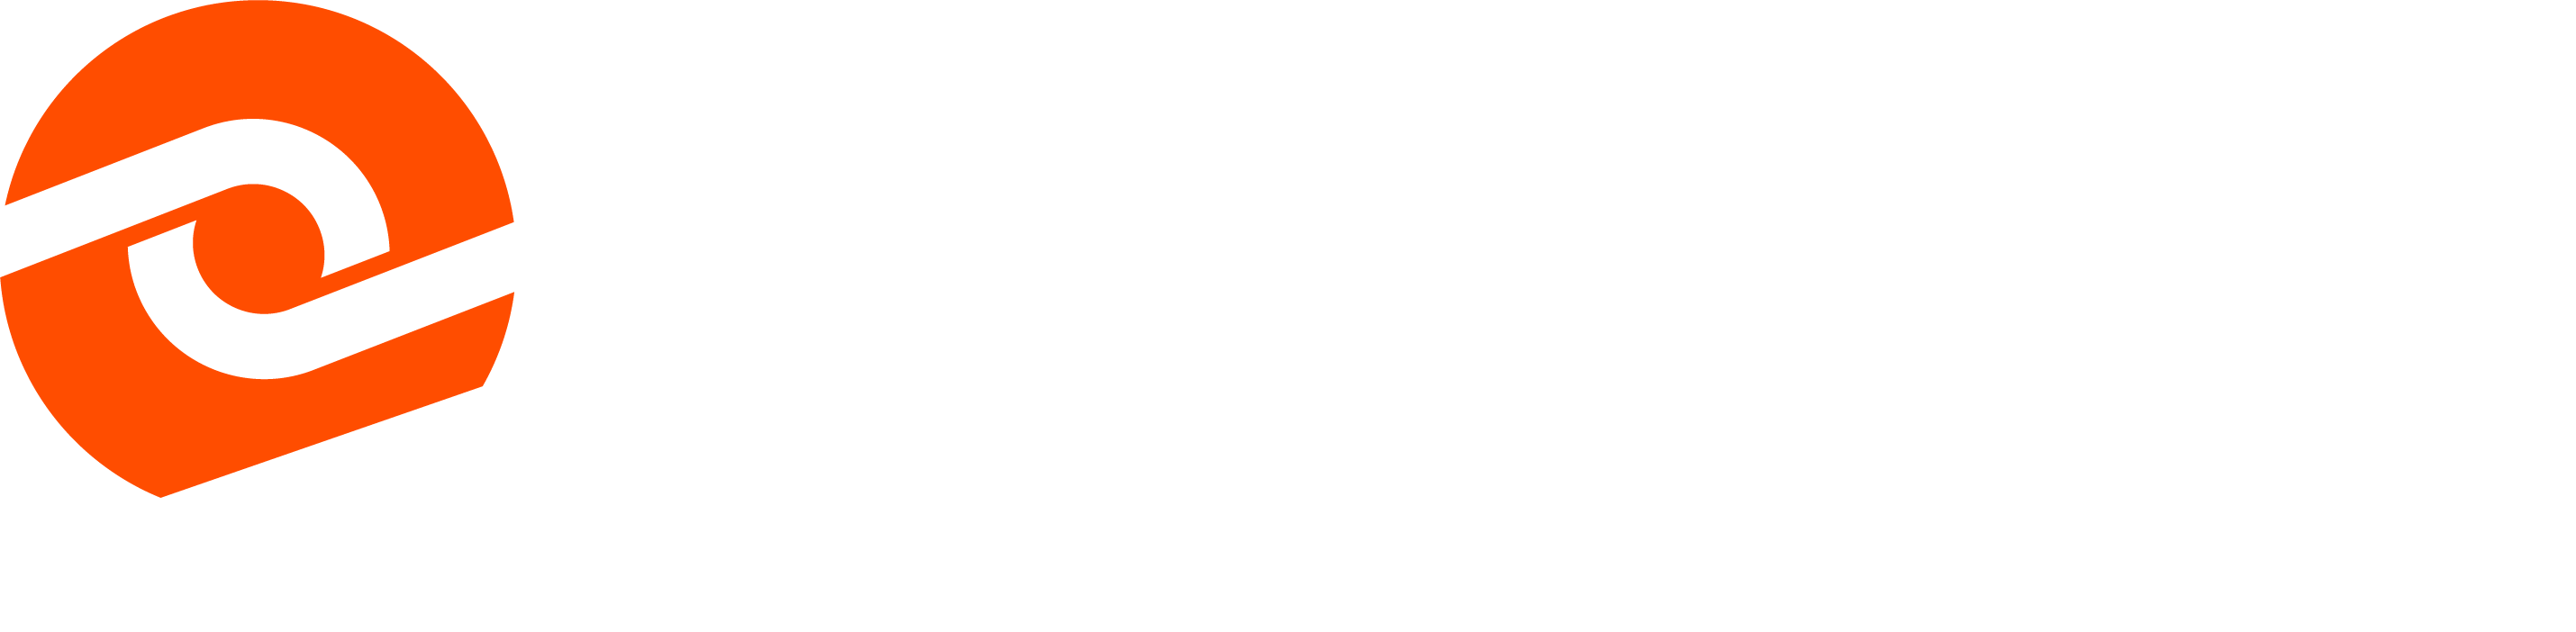 Overruled Logo